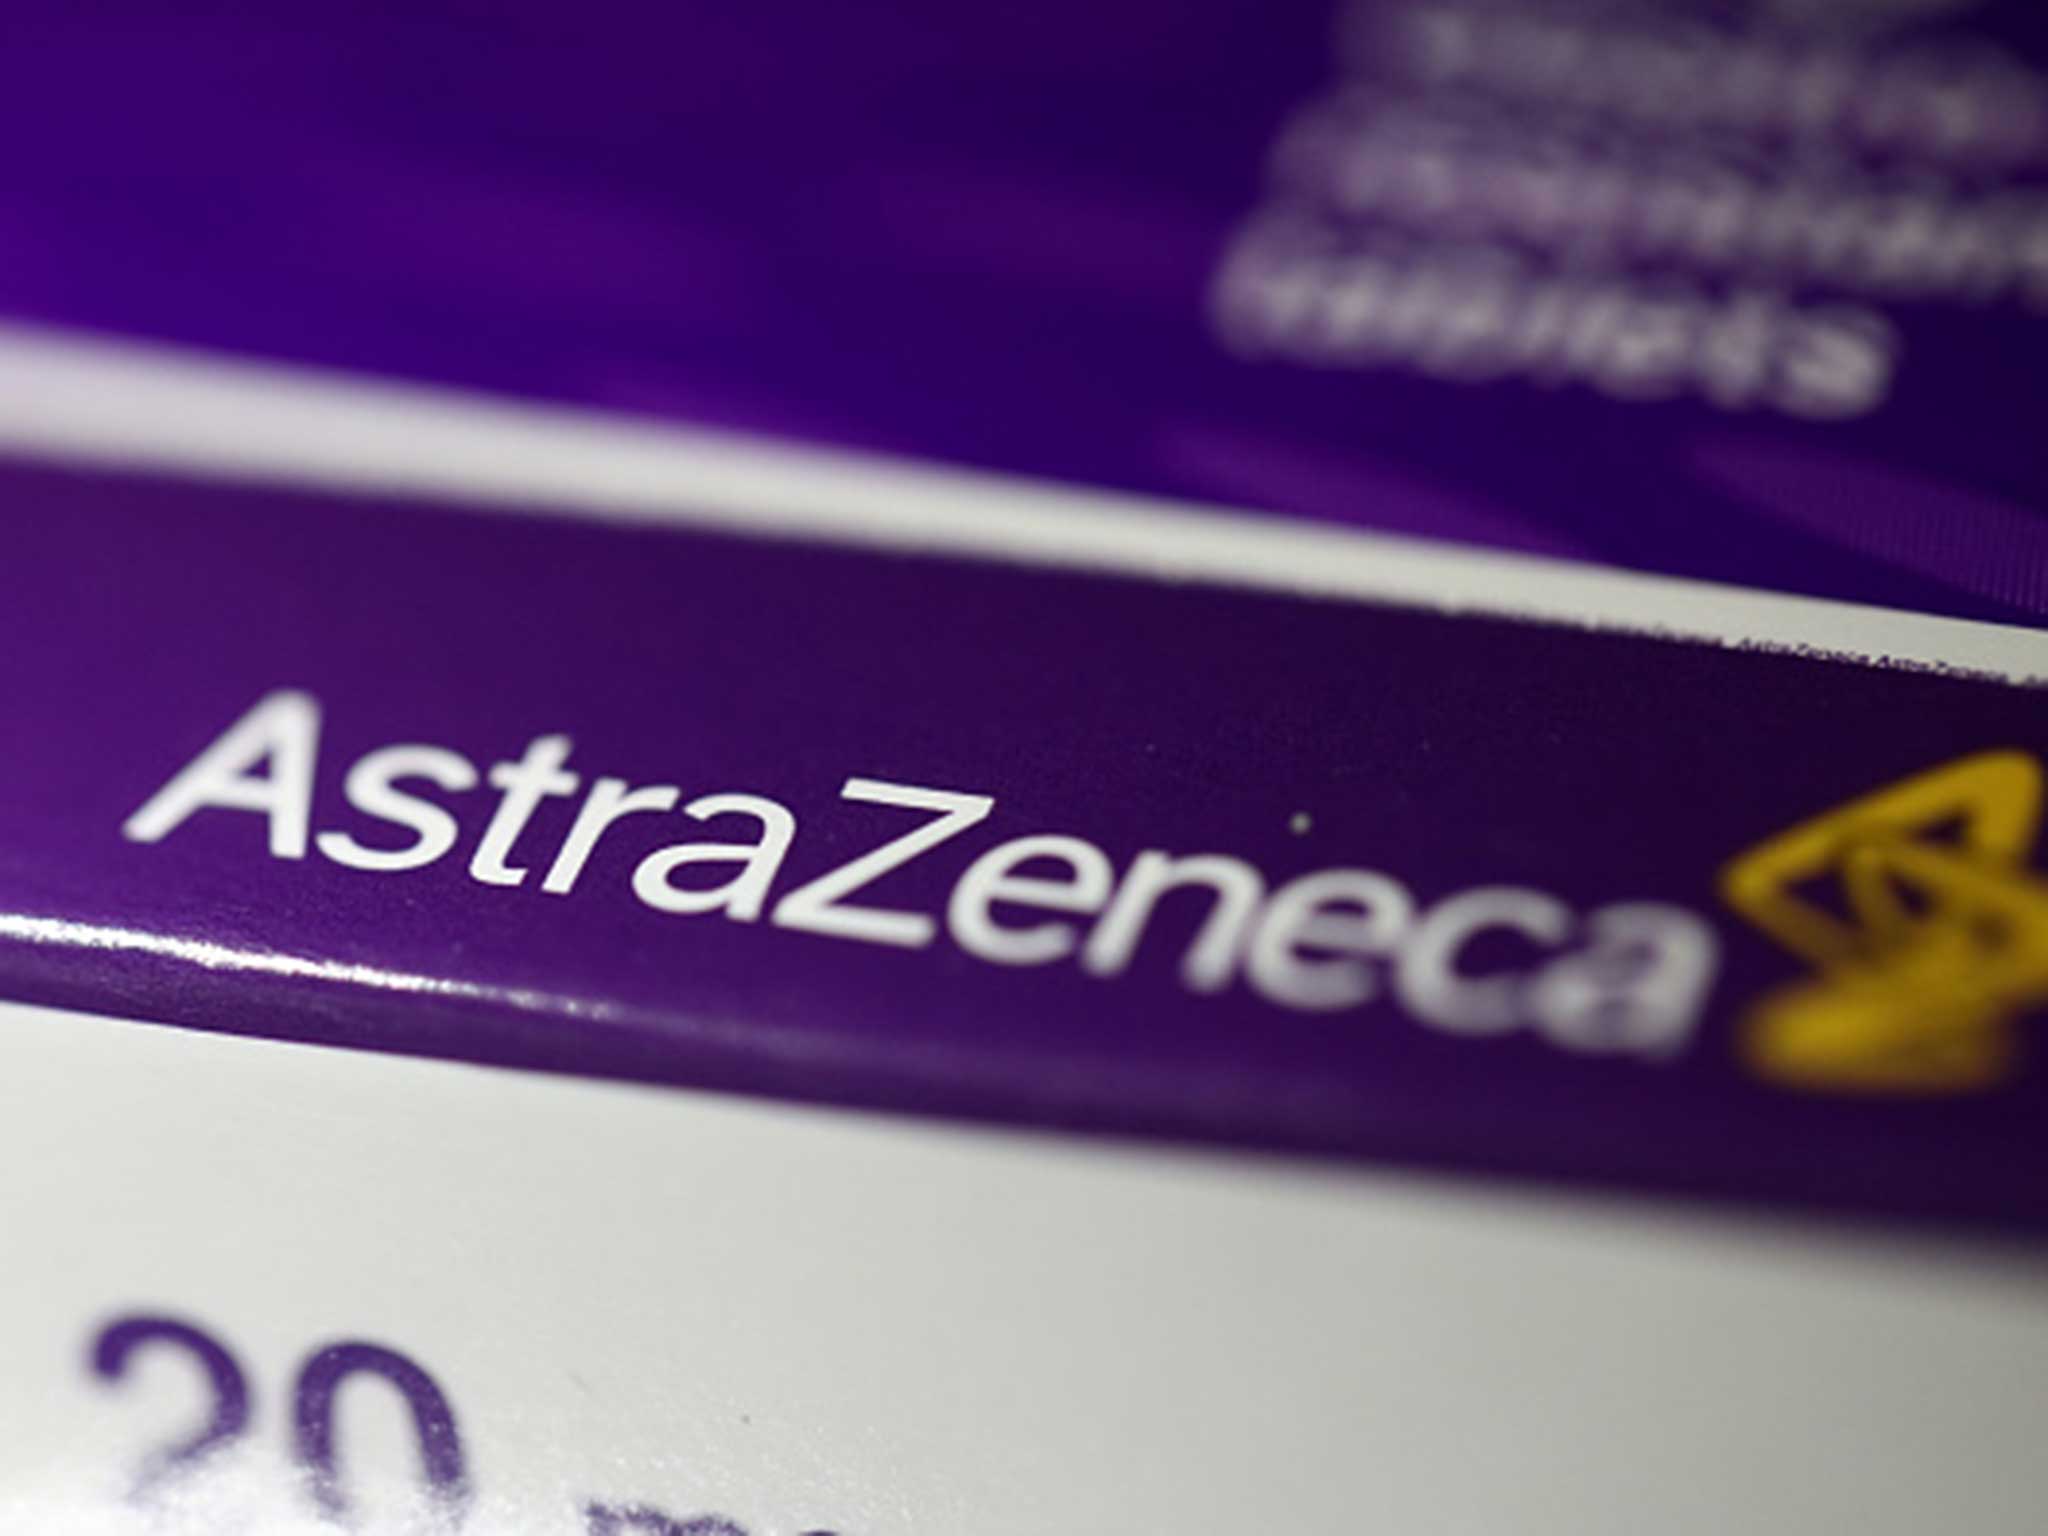 The speed of AstraZeneca’s turnaround remains uncertain